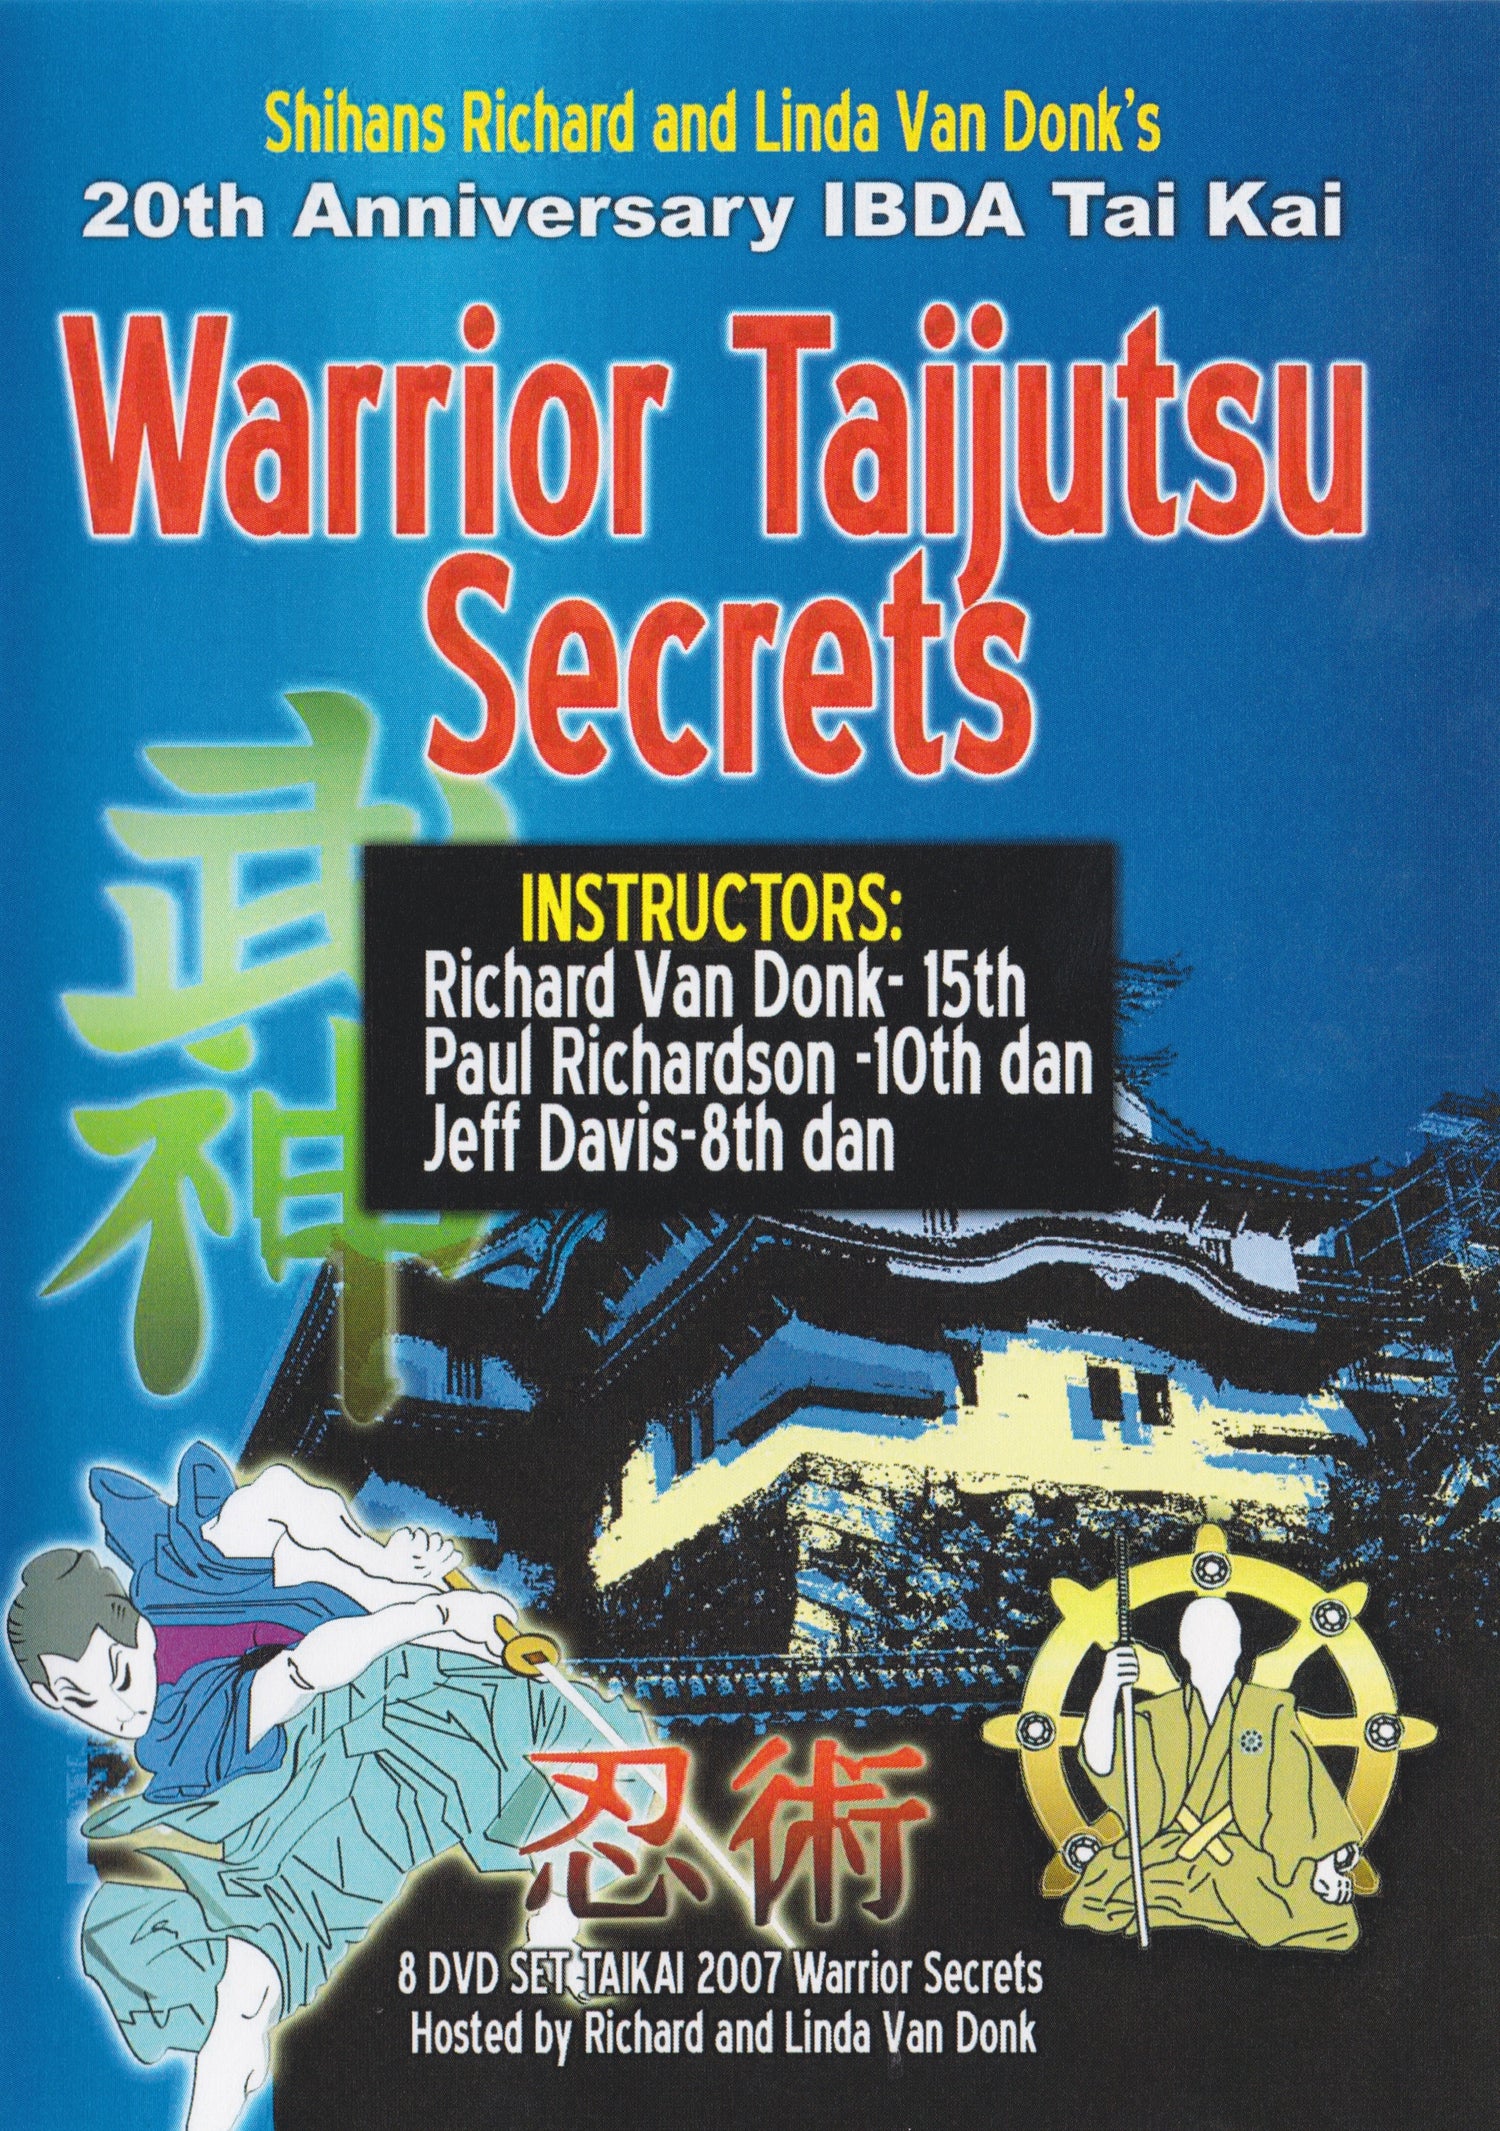 Warrior Taijutsu Secrets DVD by Richard Van Donk